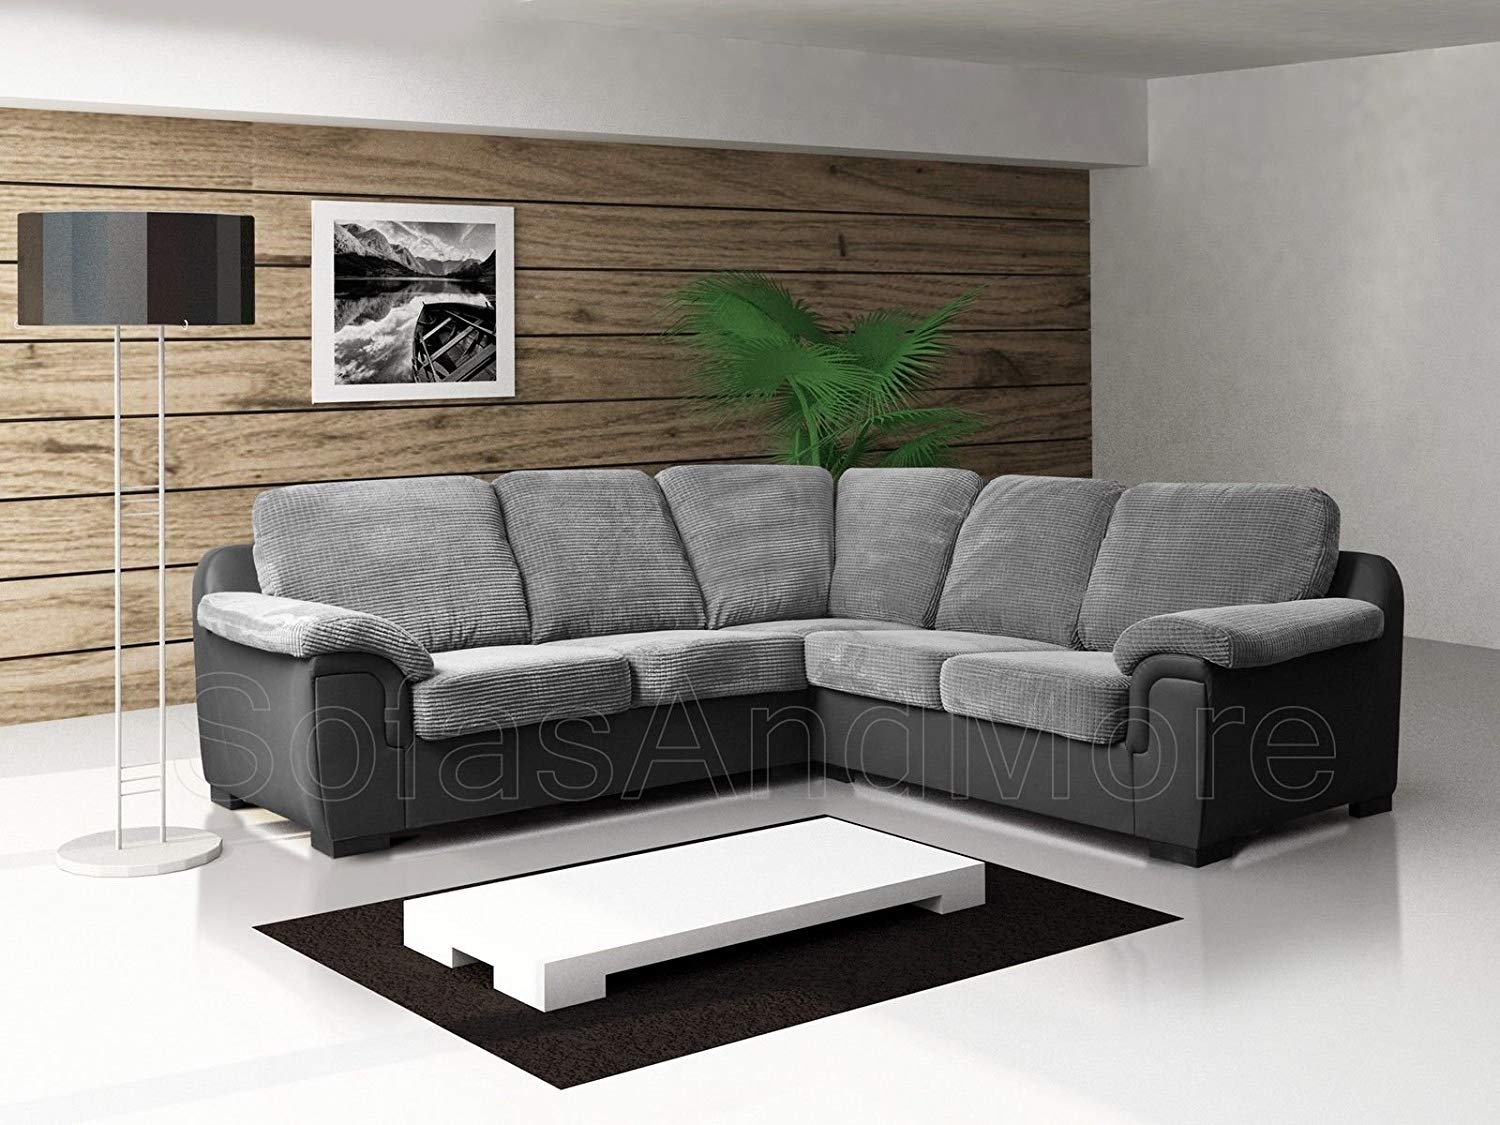 new sofas brand new - corner sofa - amy - grey - fabric: amazon.co.uk: kitchen CTYAILF